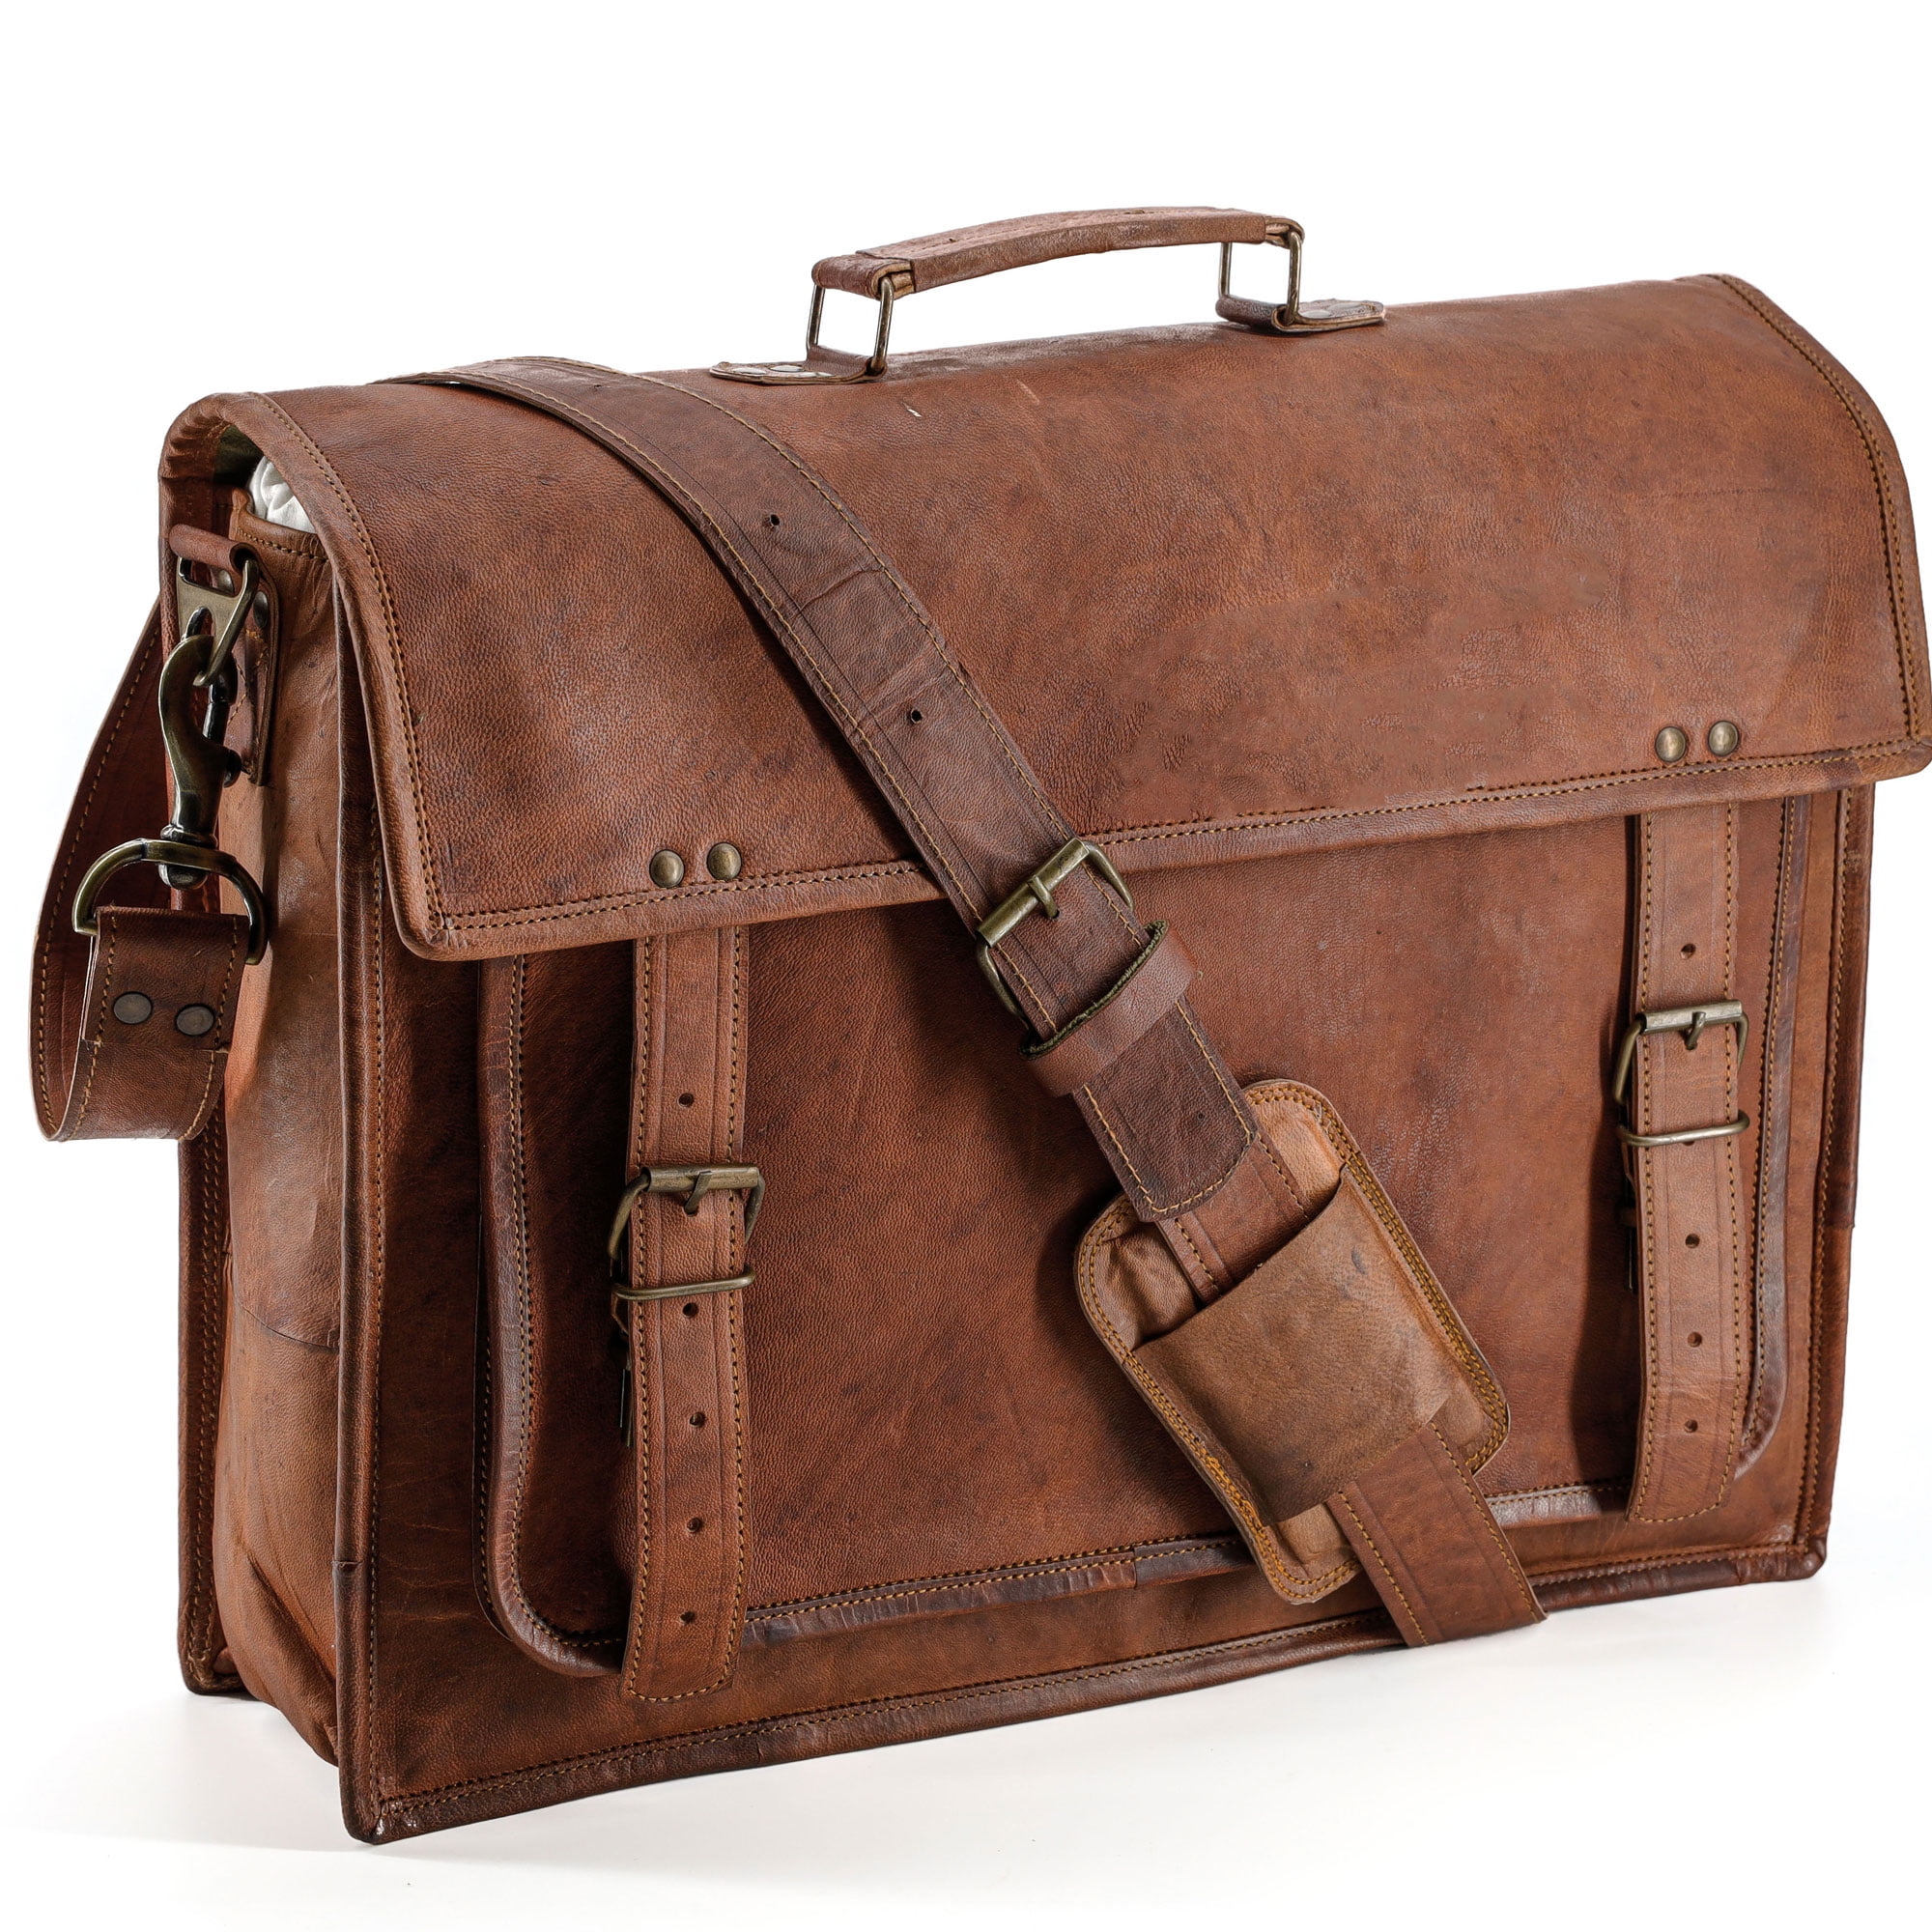 Leather briefcase mens ladies office handbag shoulderbag messenger business bag satchel brown made in Italy genuine leather 